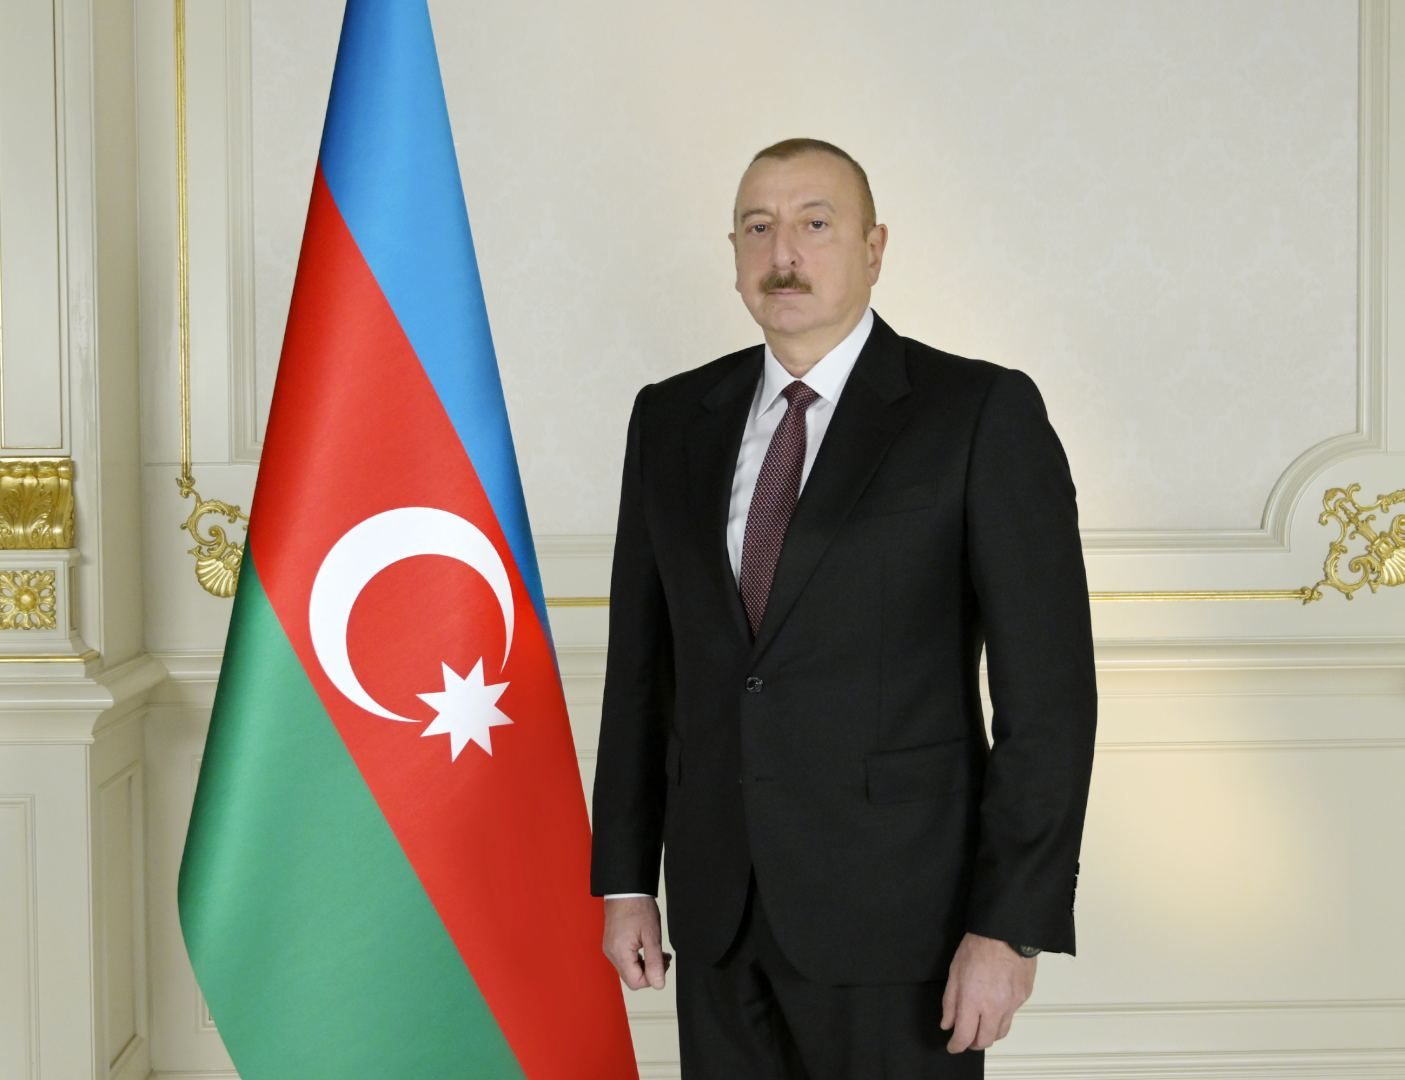 Azerbaijani Defense Ministry servicemen awarded “Major General” rank - order